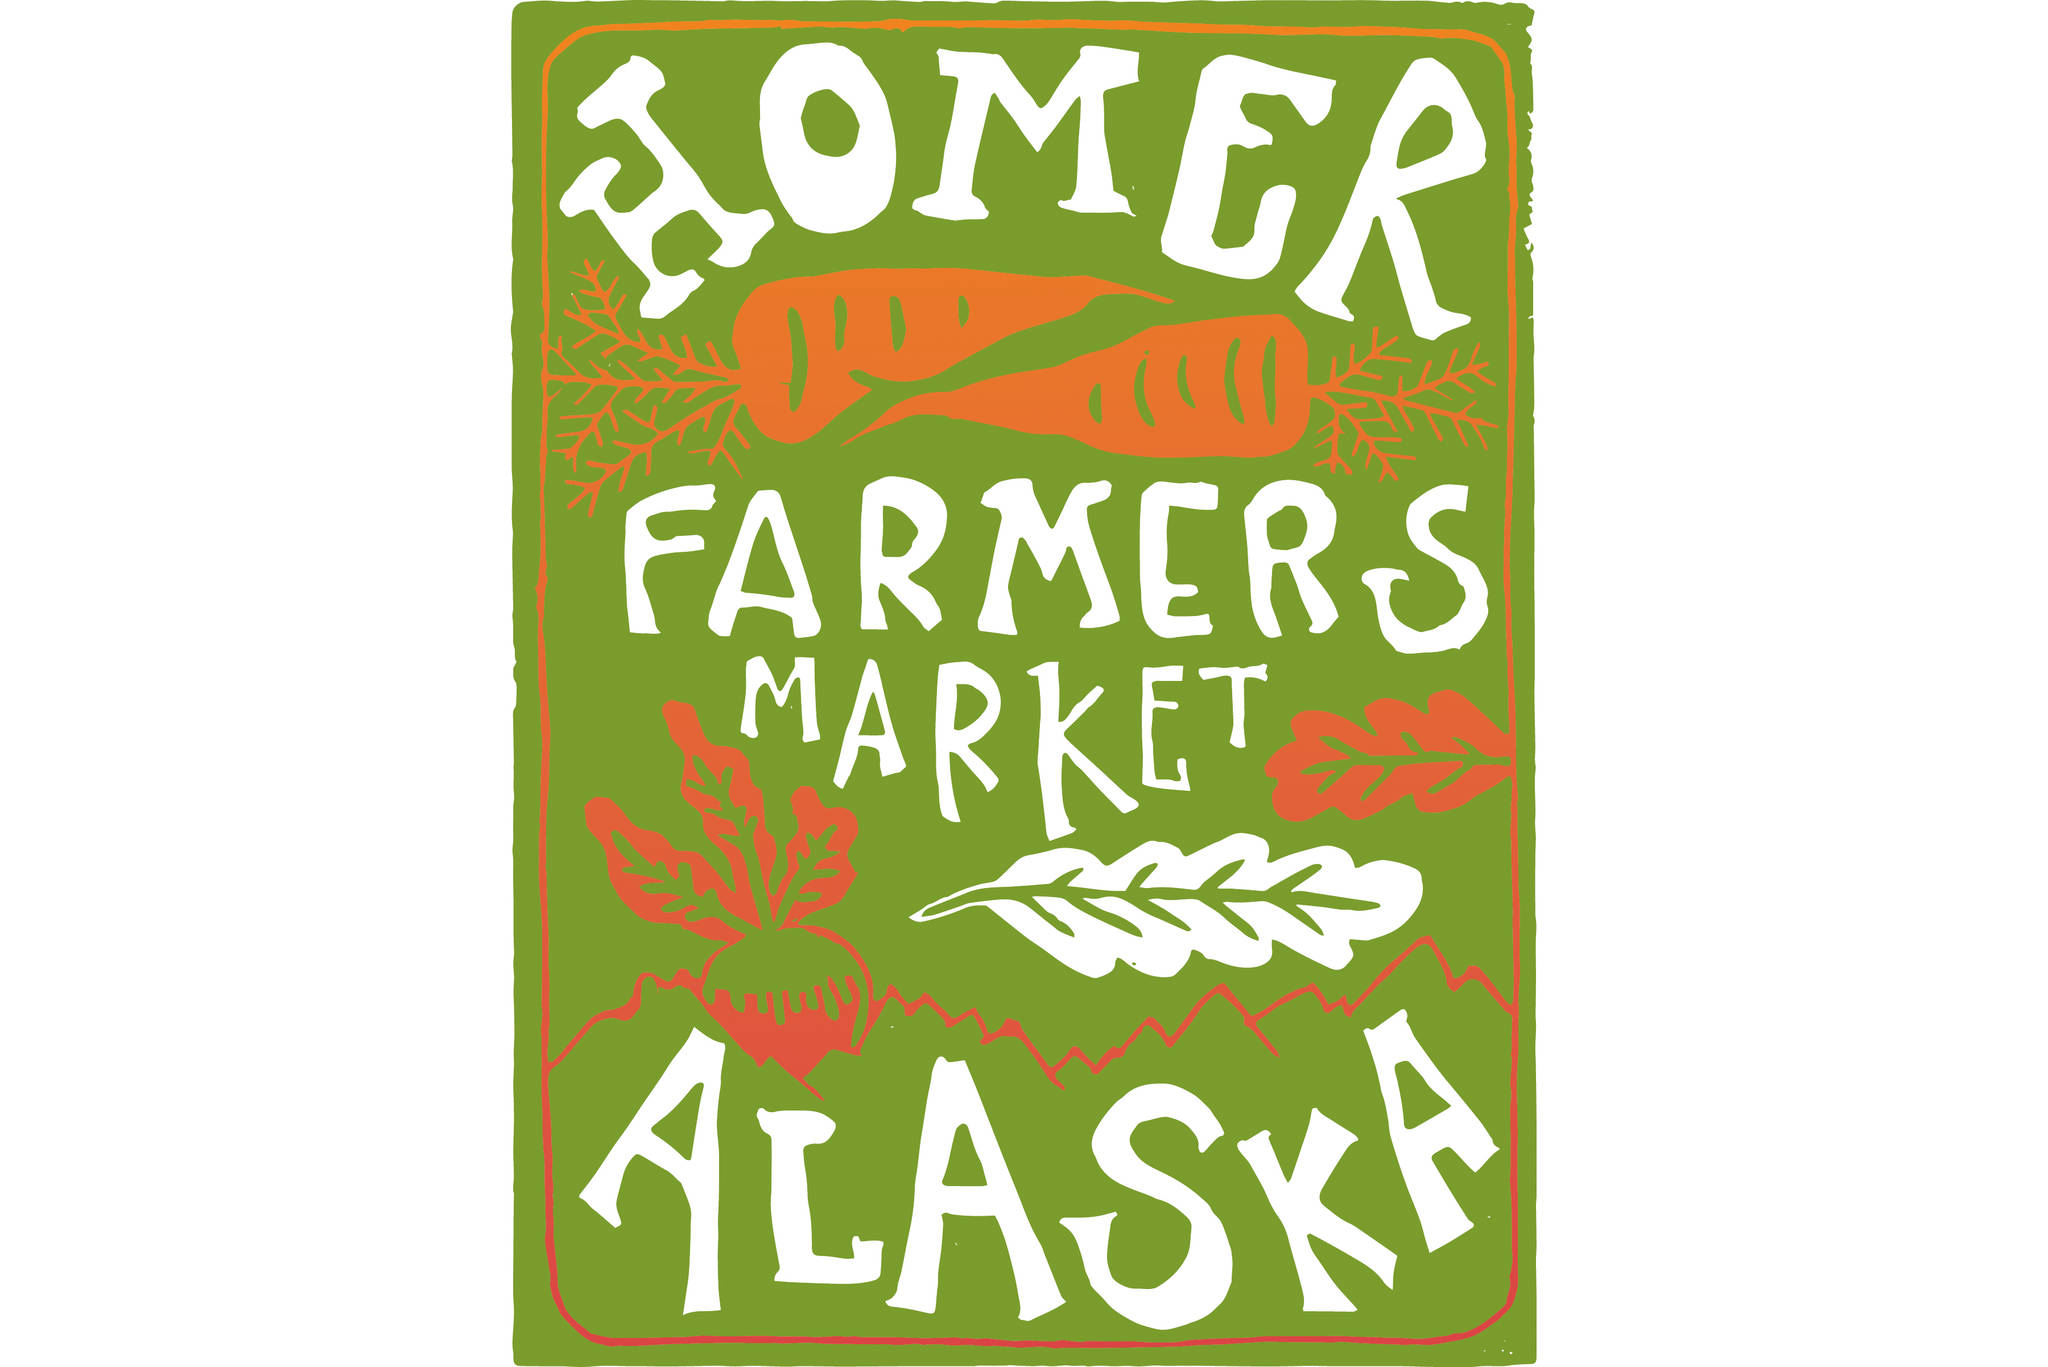 Homer Farmers Market: Alaska farming has grown in past 5 years